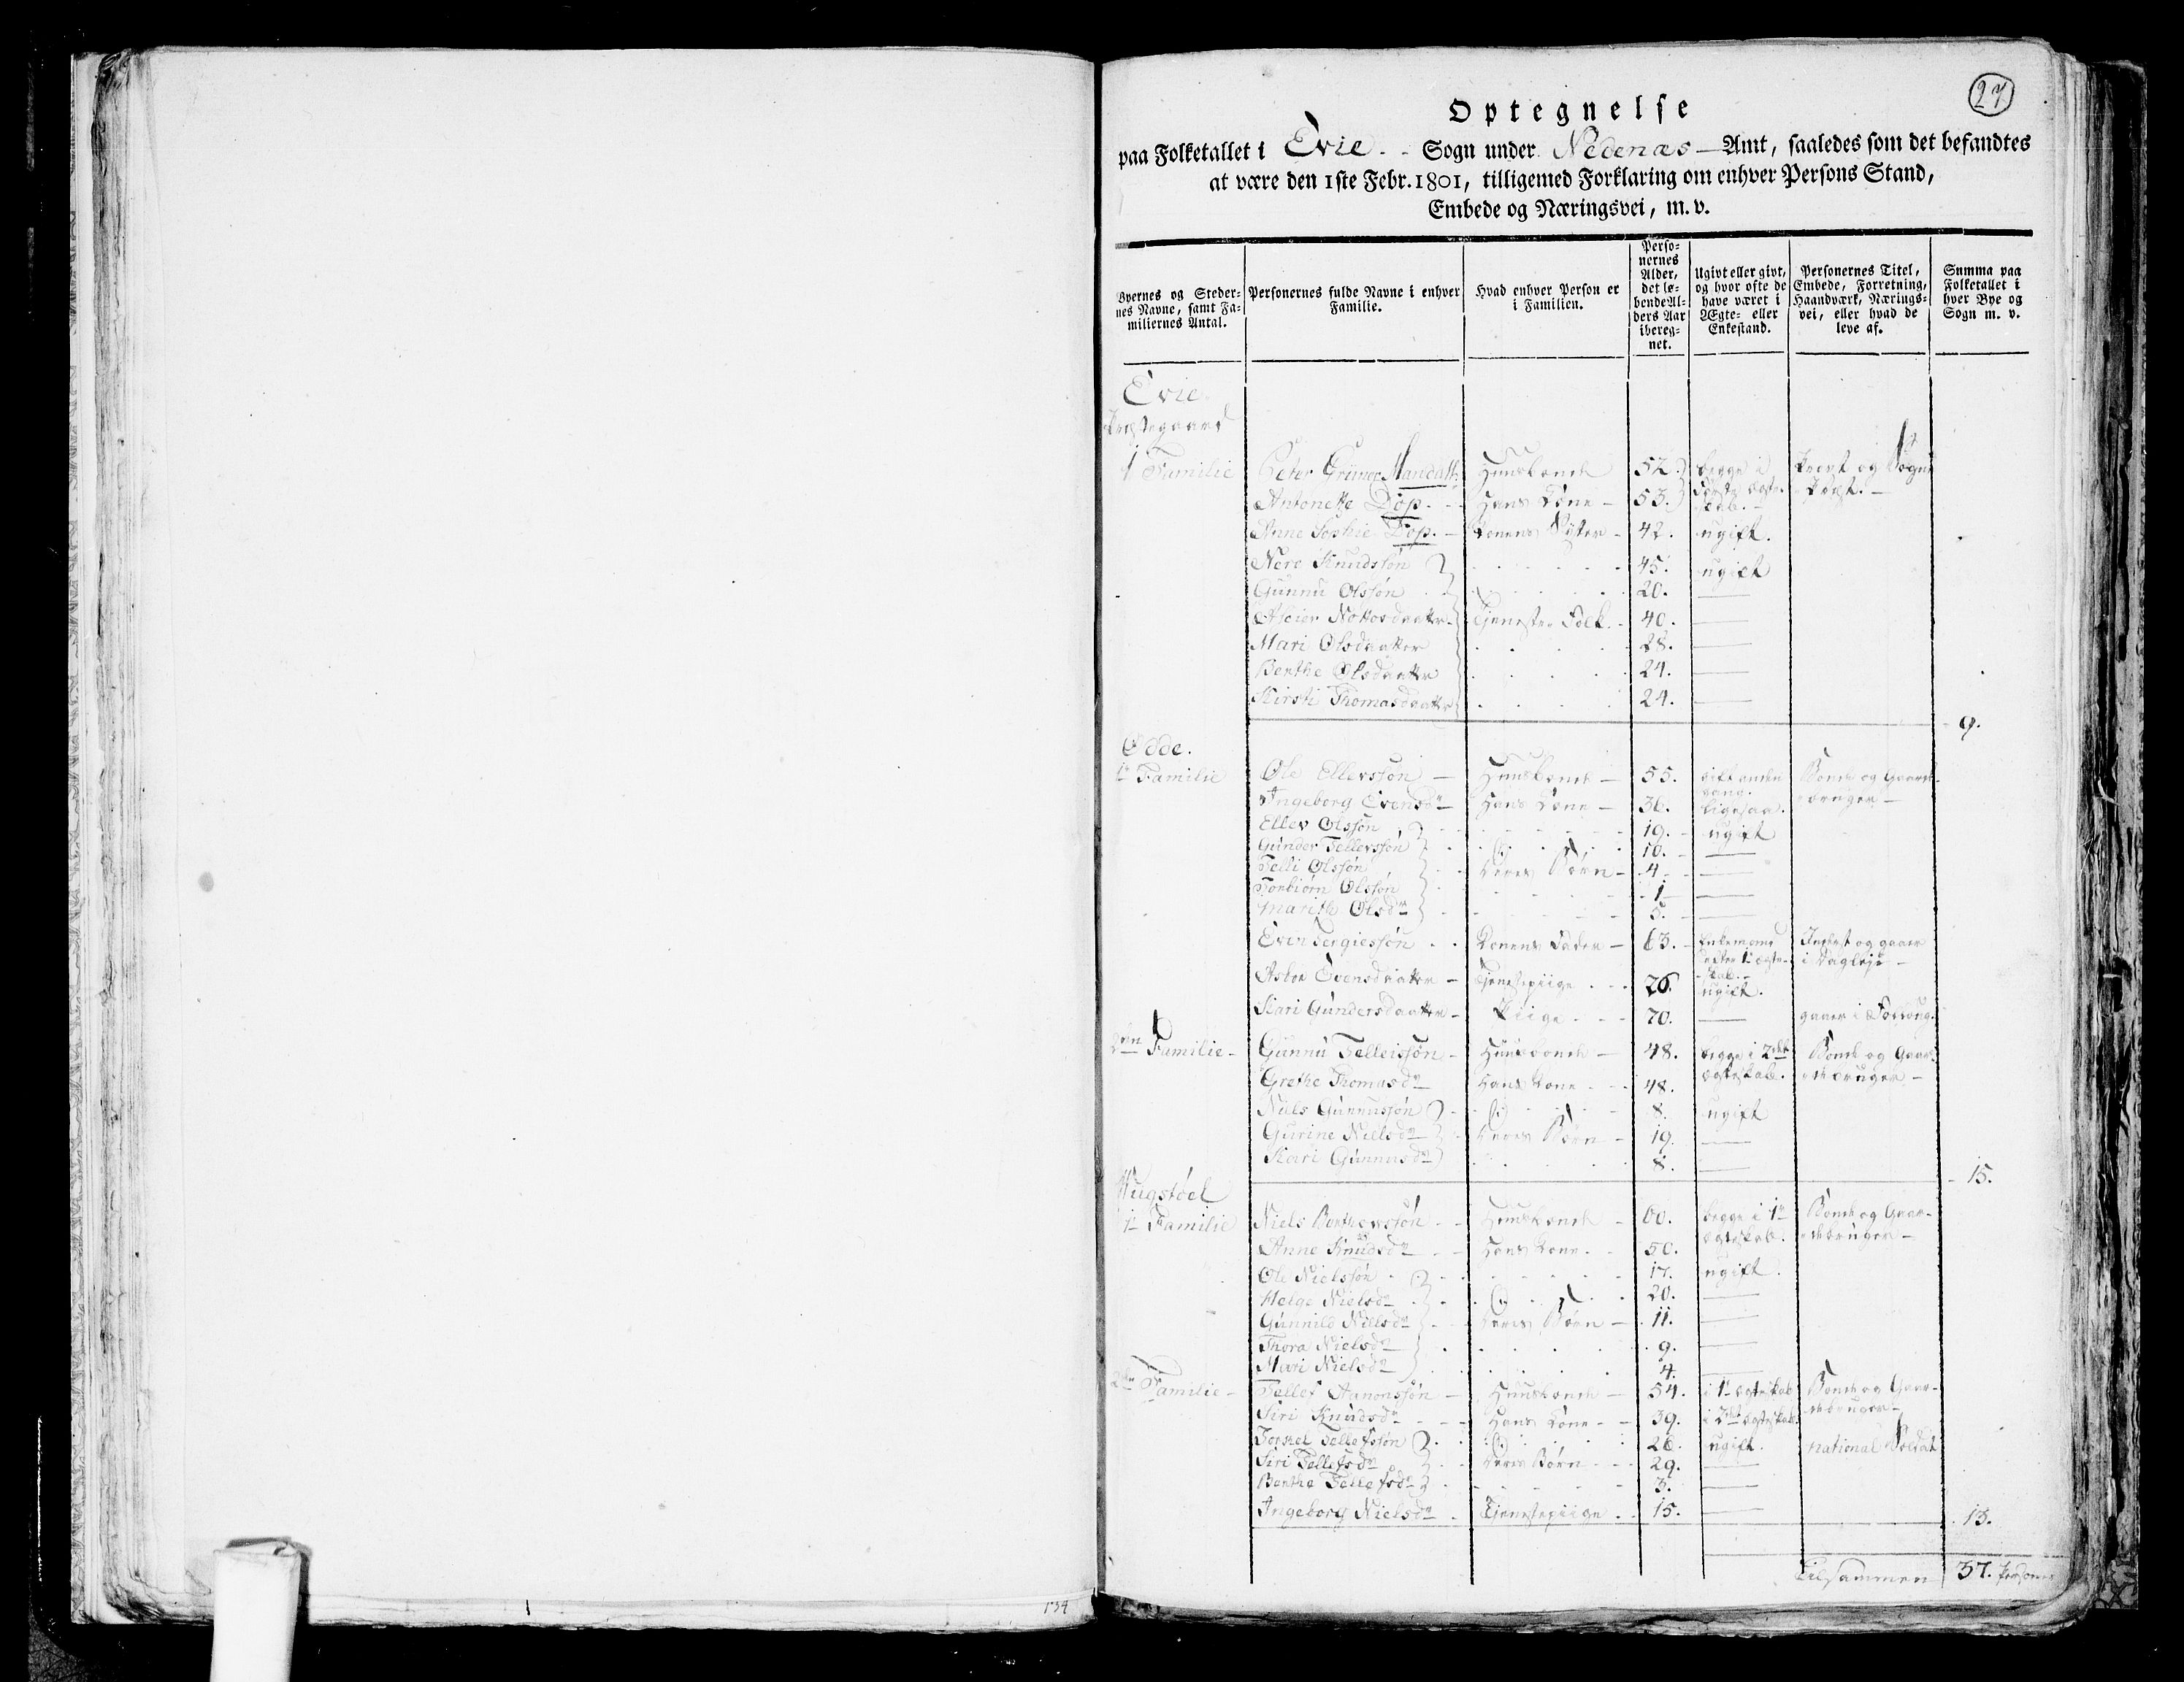 RA, Folketelling 1801 for 0934P Evje prestegjeld, 1801, s. 26b-27a